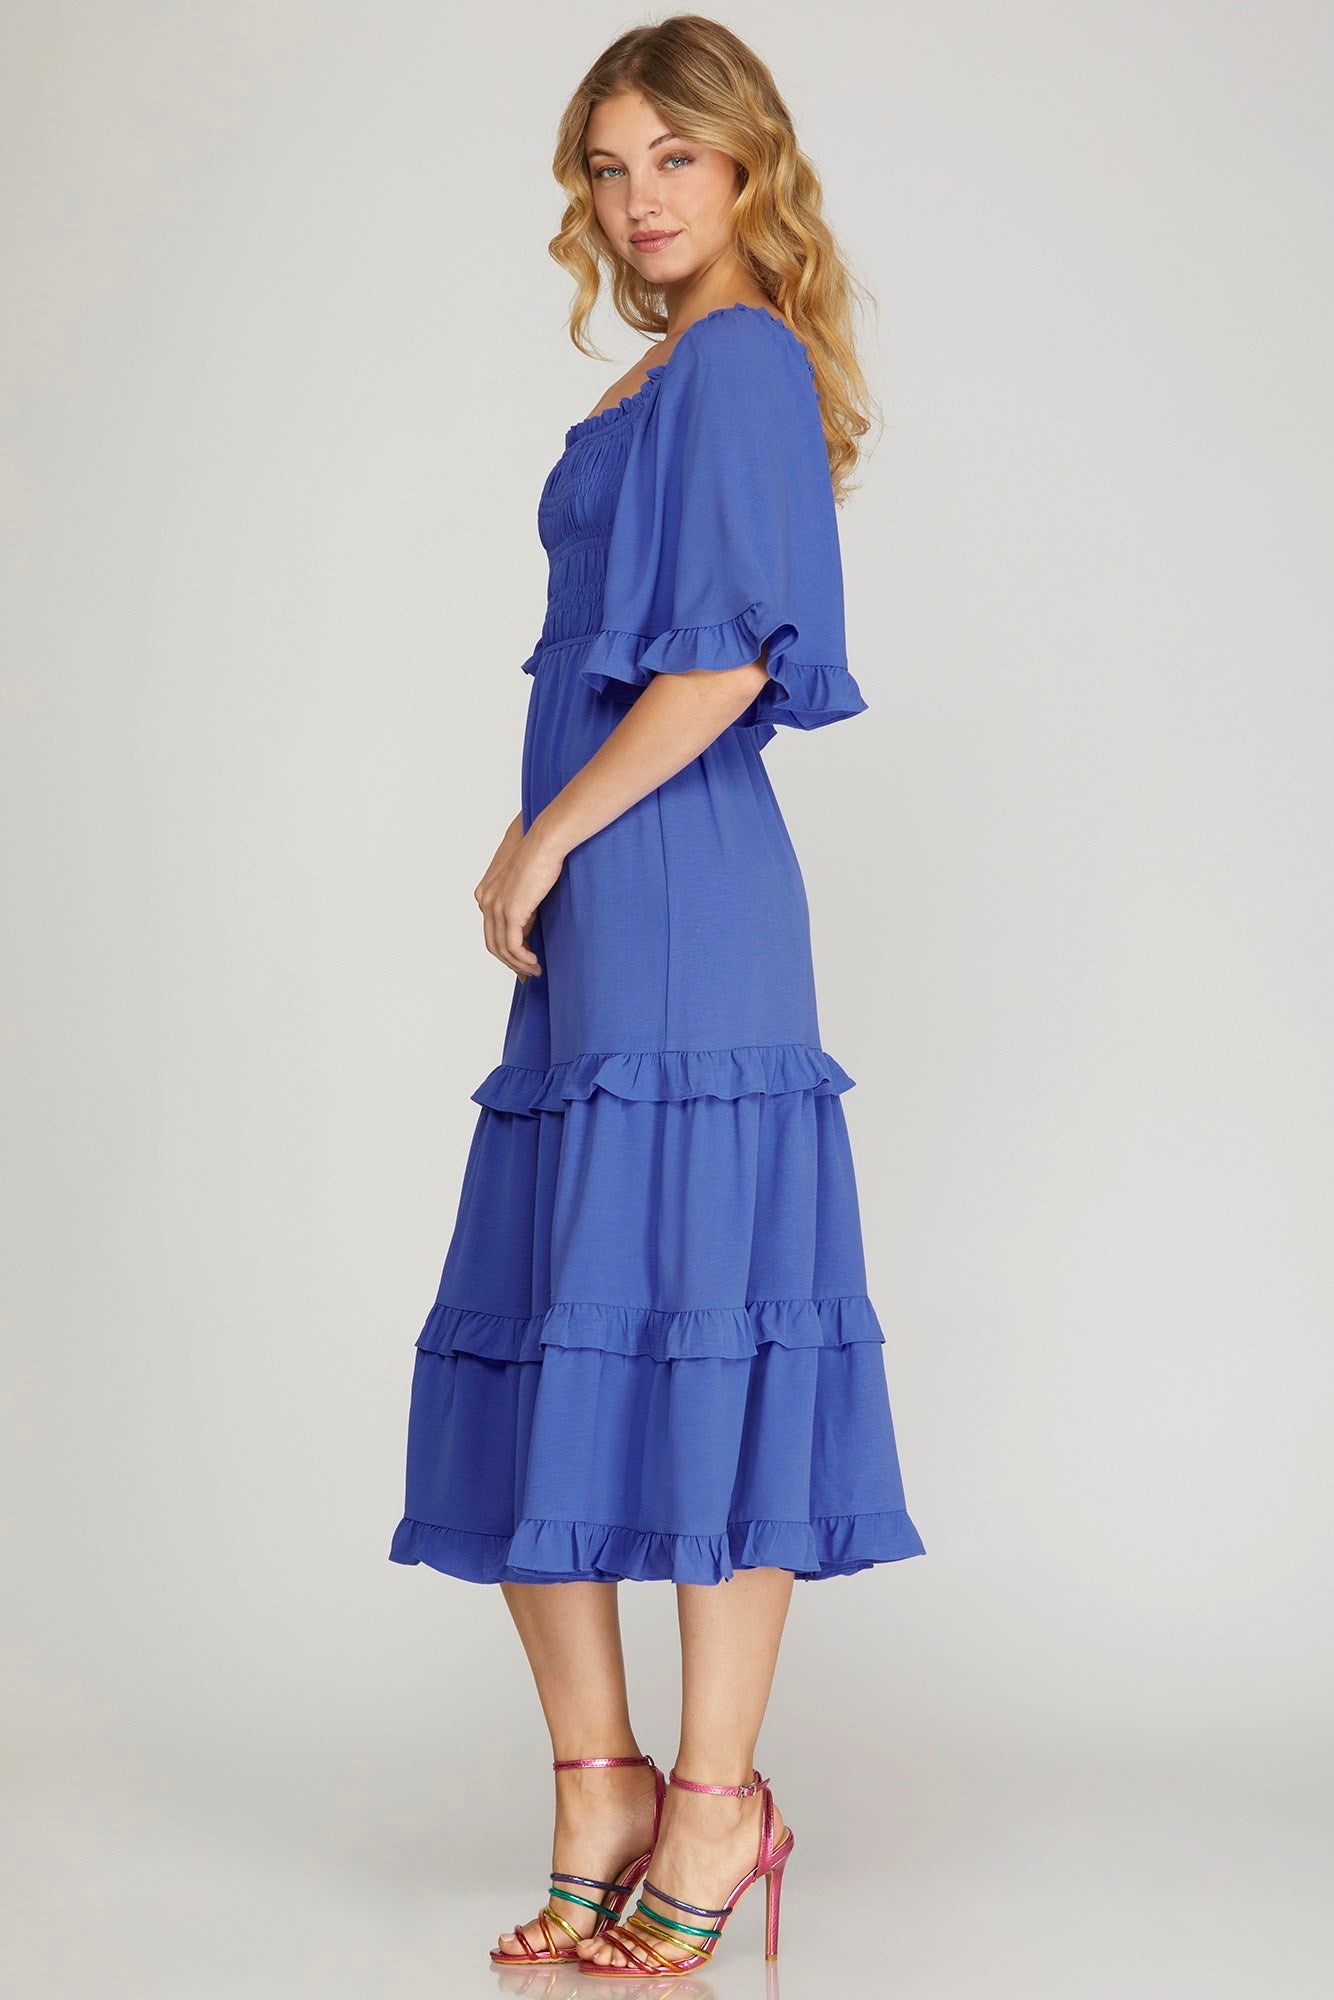 Blue Bell Sleeve Smocked Dress